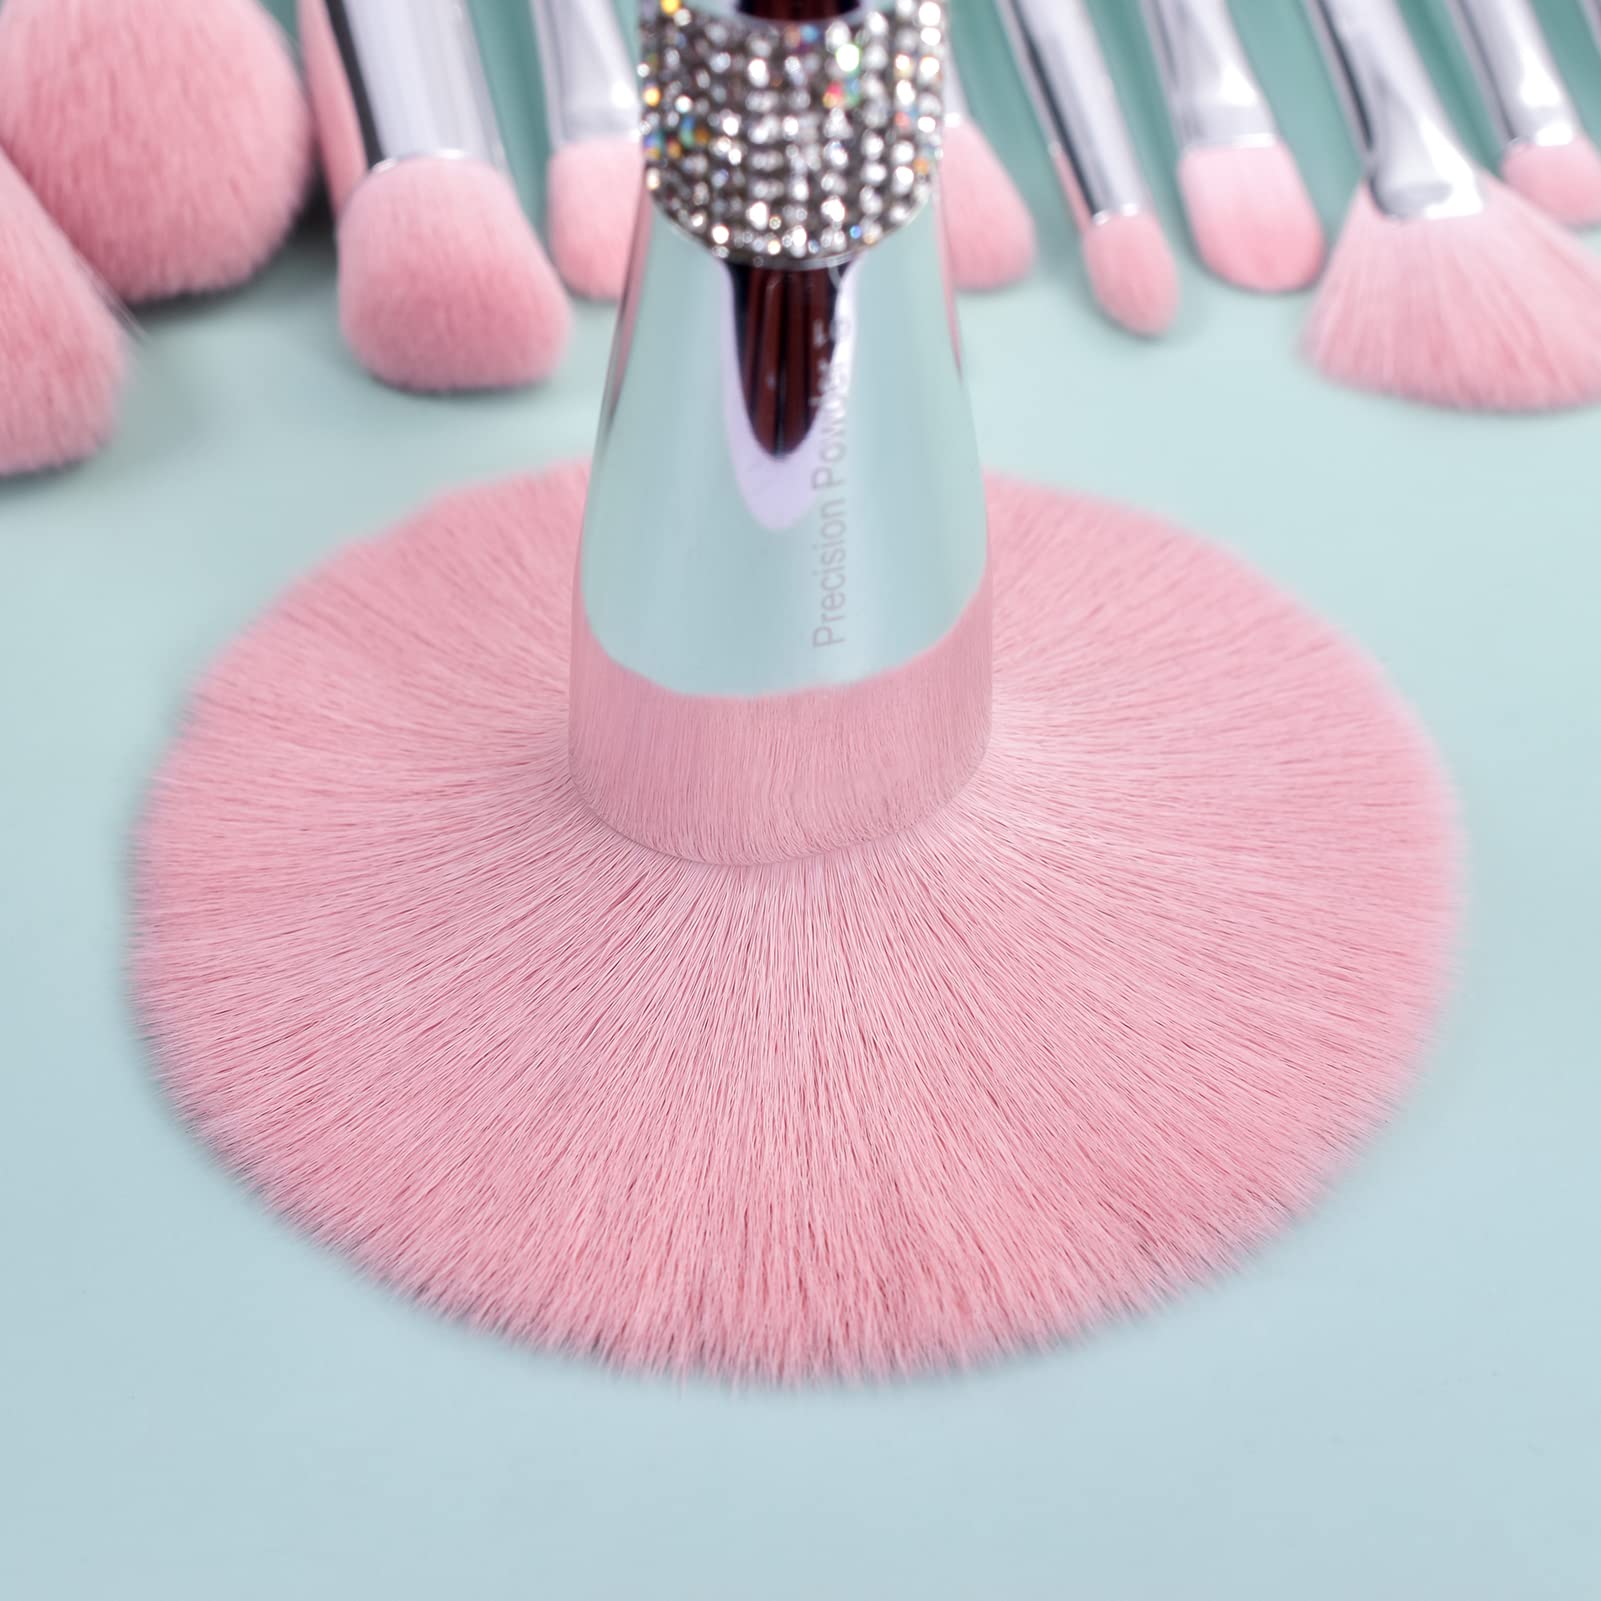 Bueart Design Elegant pink Ultra soft labeled Makeup Brushes Sets with Cute Brush Holder case makeup brush set with Foundation Powder blush concealer blending eyeshadow contour Glitter